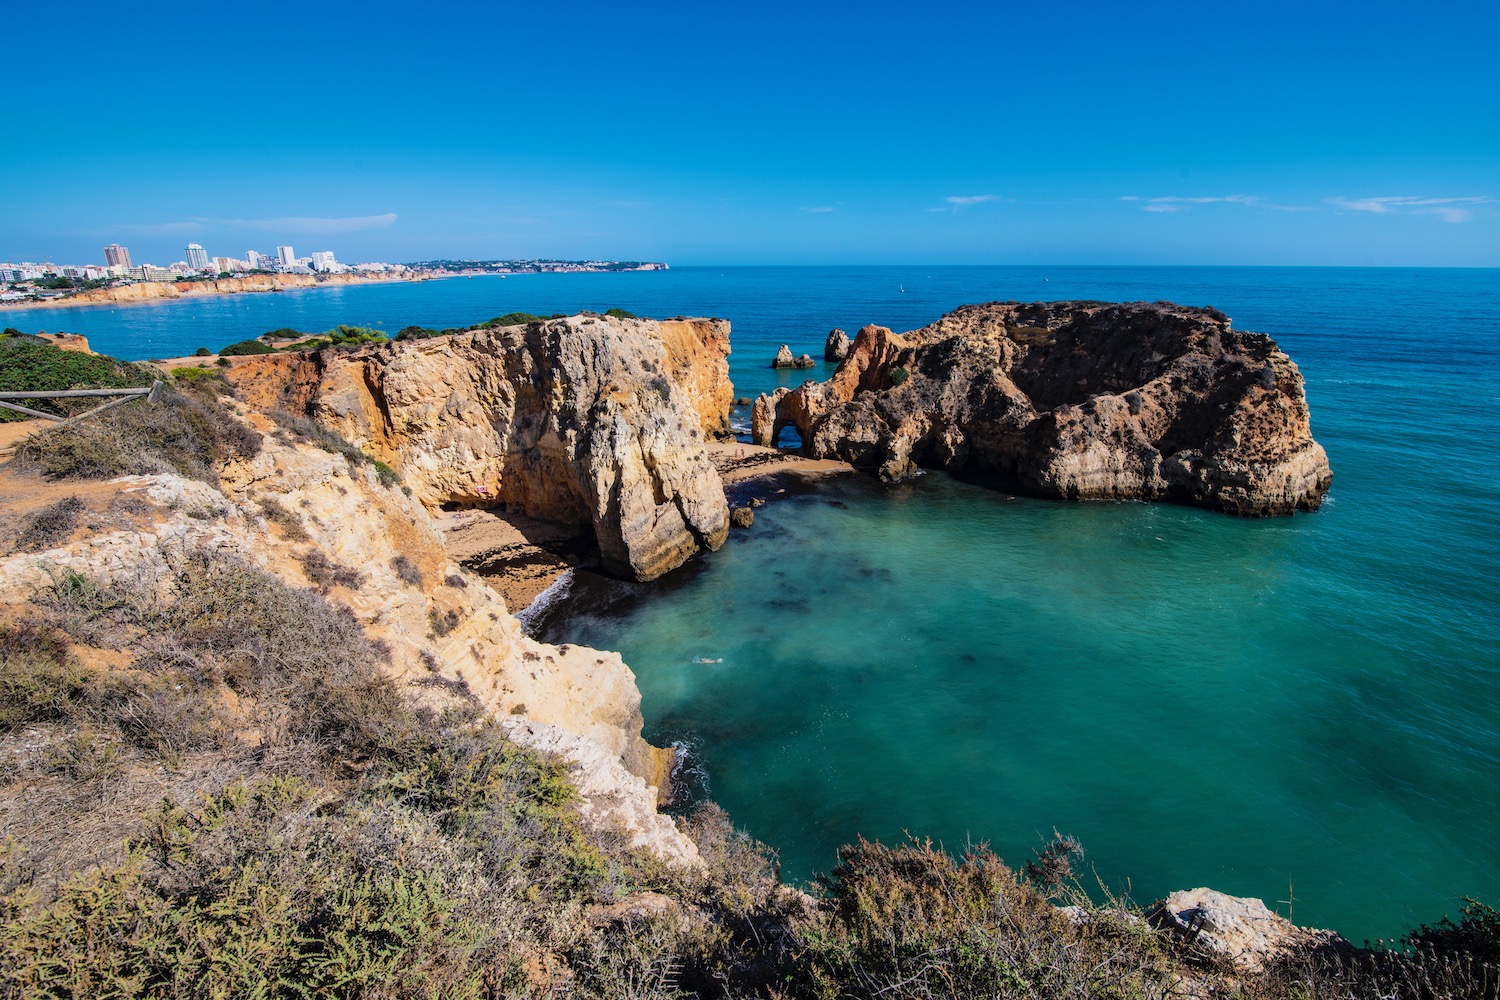 Should You Visit the Algarve?